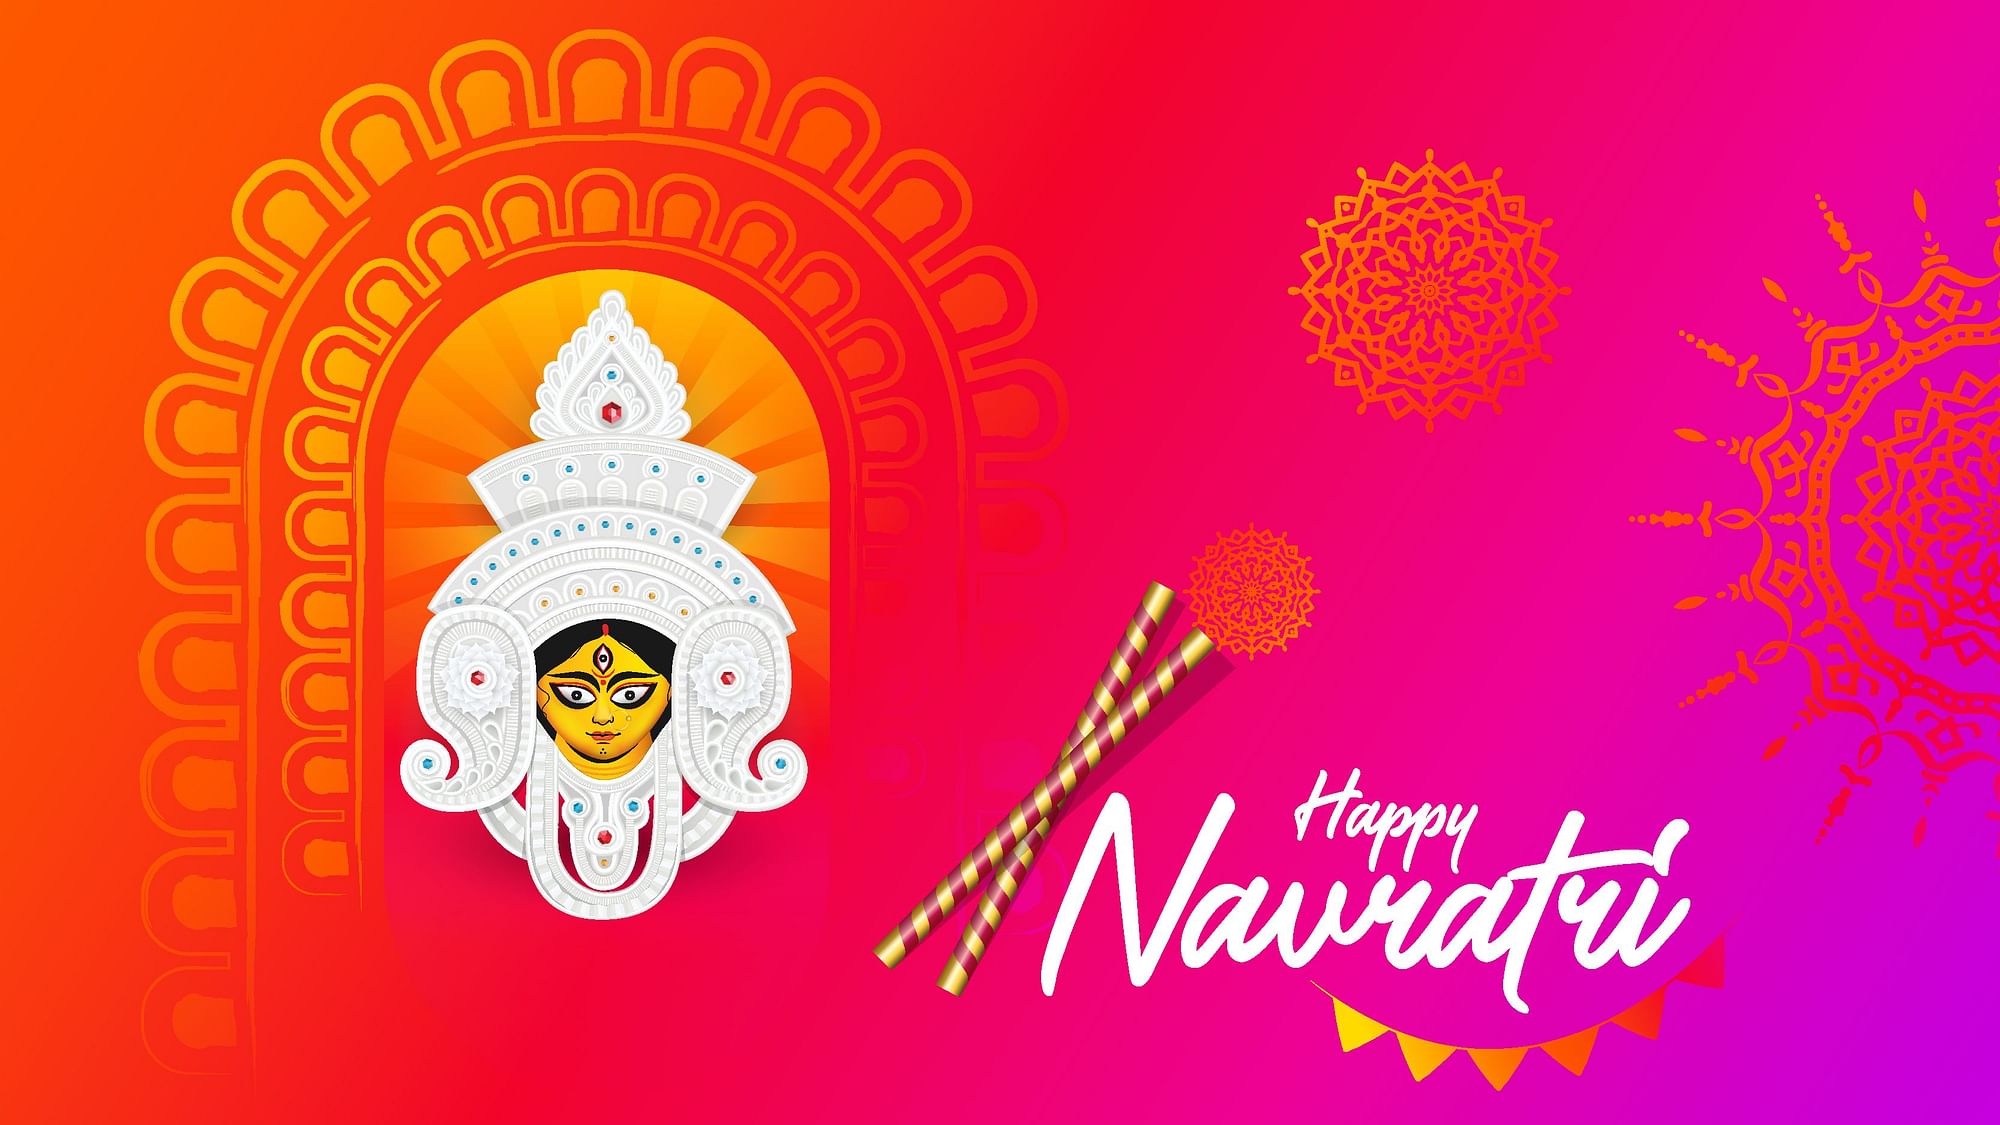 Happy Shardiya Navratri 2019 Greetings, Images with Quotes